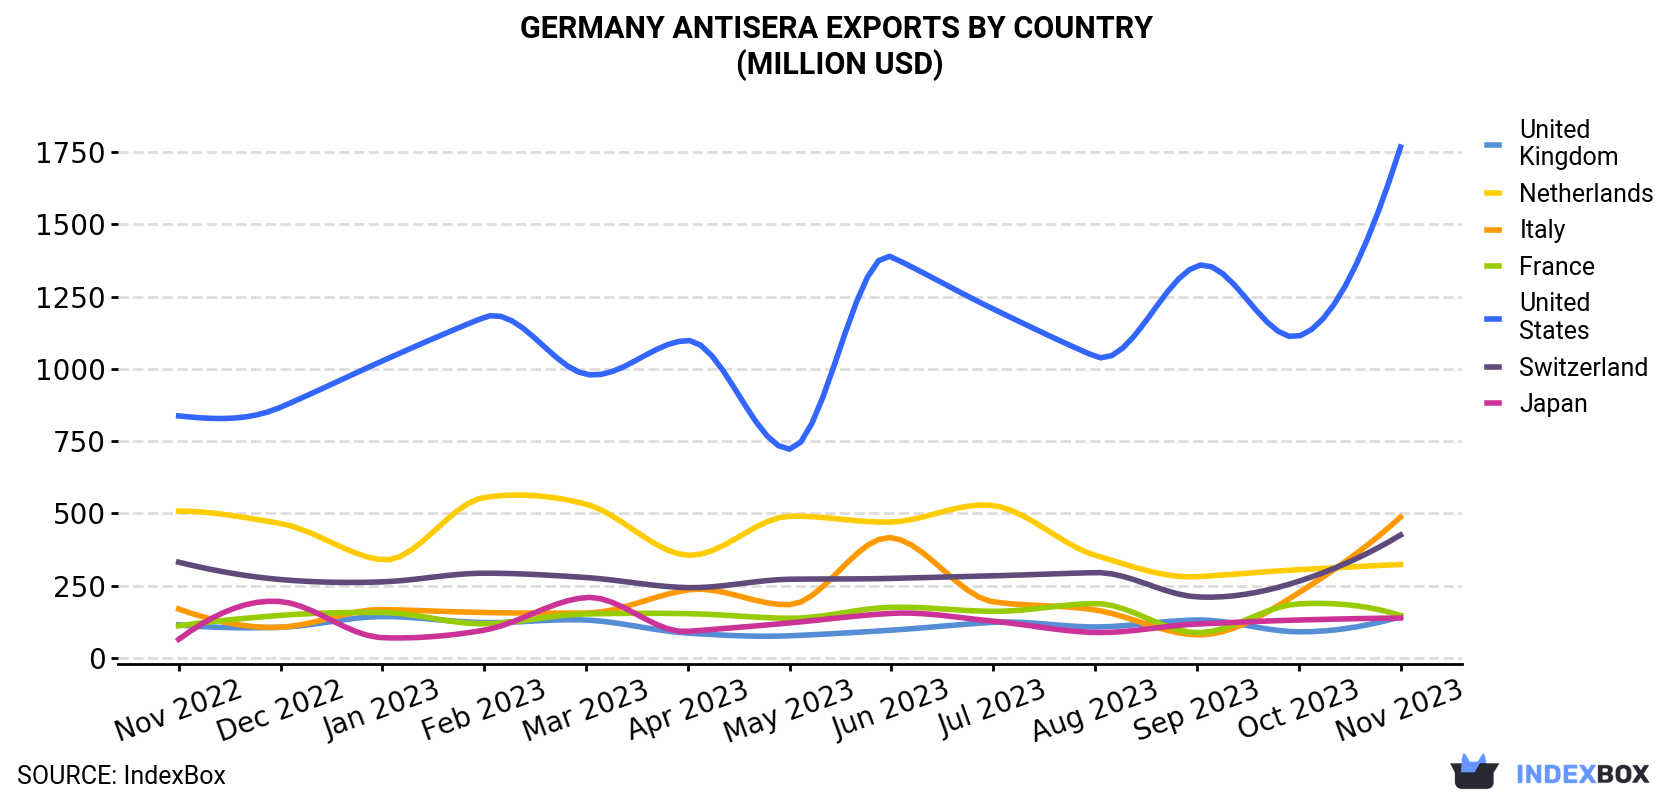 Germany Antisera Exports By Country (Million USD)